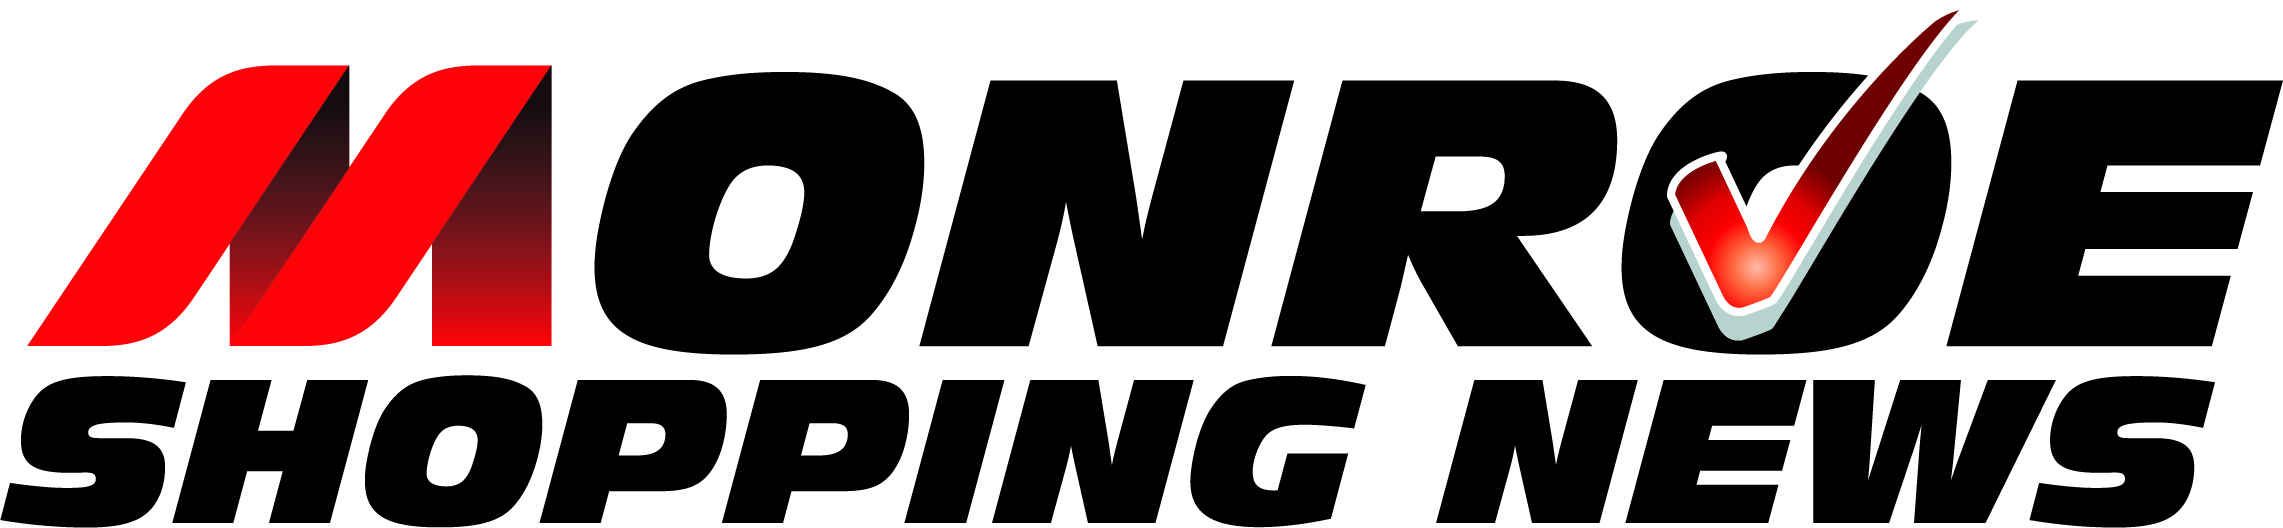 Shopping News logo